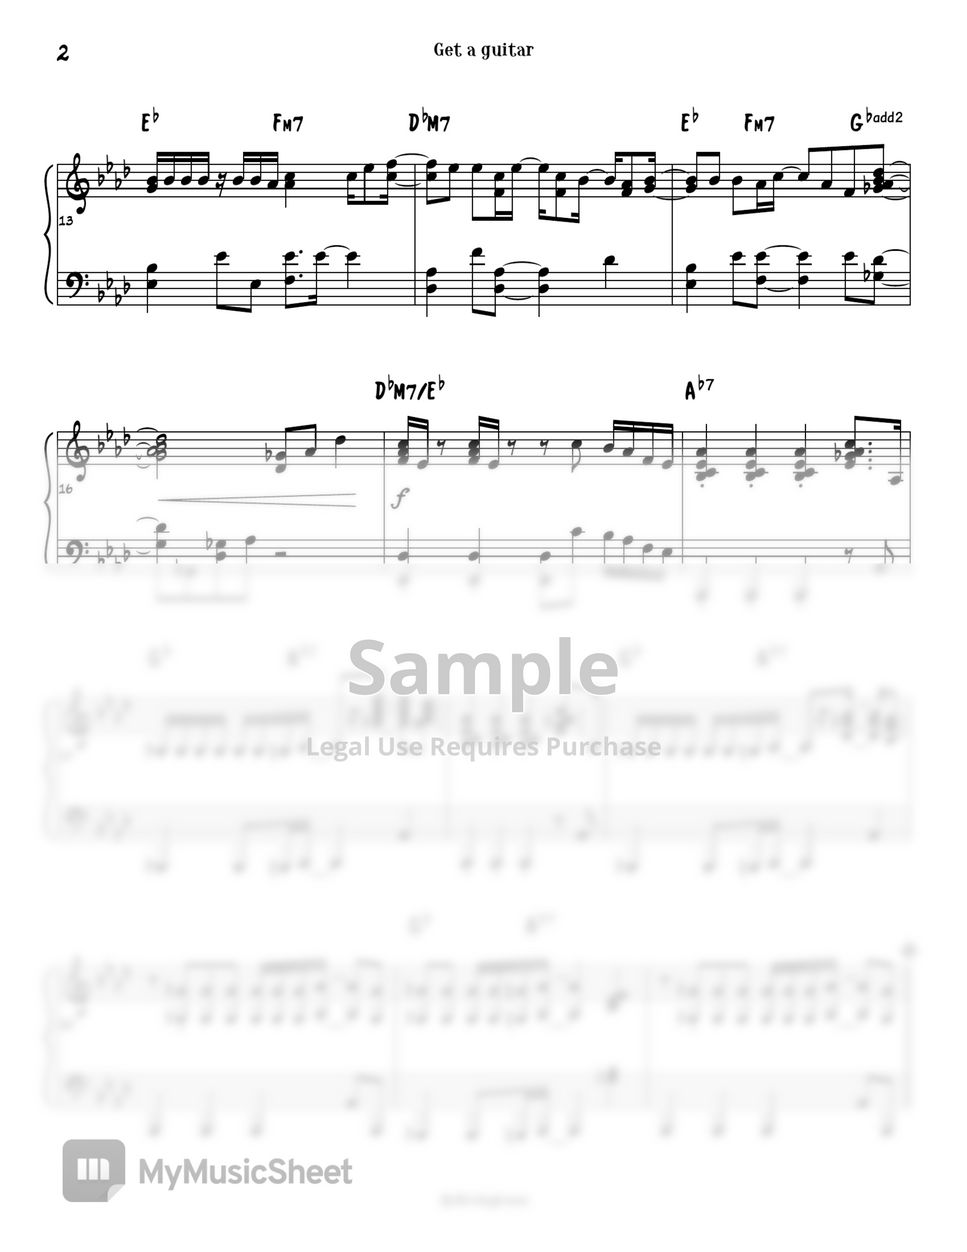 RIIZE (라이즈) - Get A Guitar (piano sheet / 피아노 악보) by Divingtone